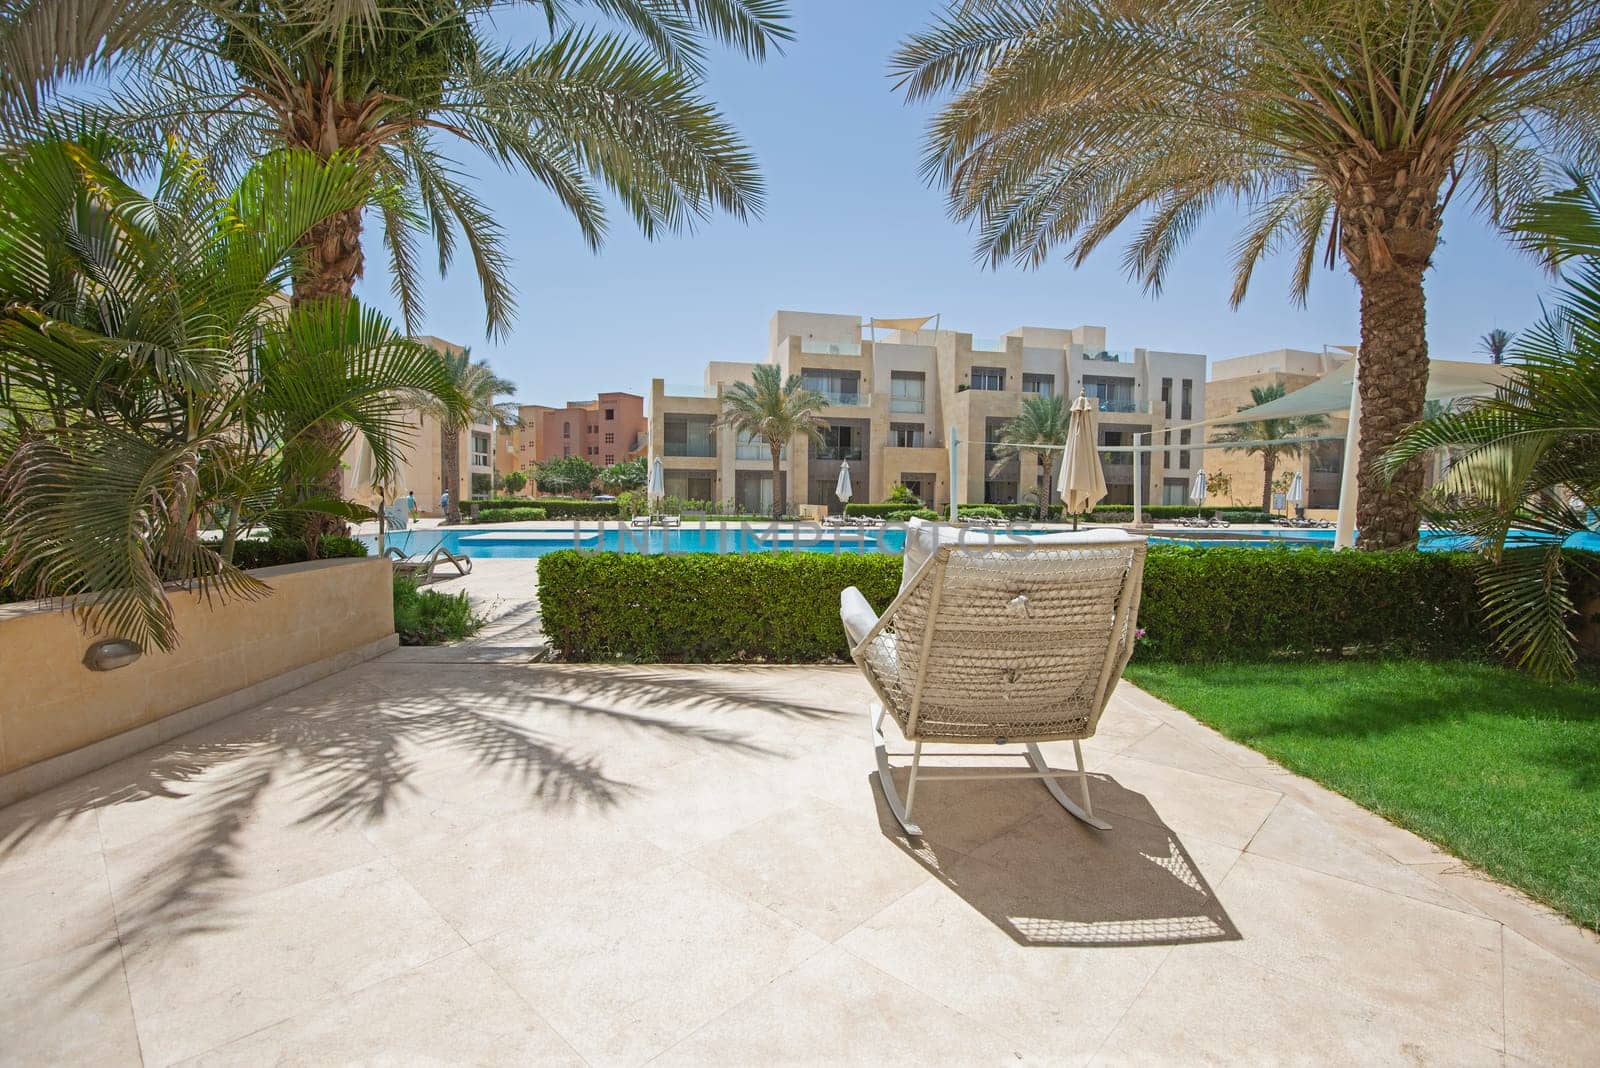 Patio terrace garden with chair in tropical luxury apartment resort by paulvinten